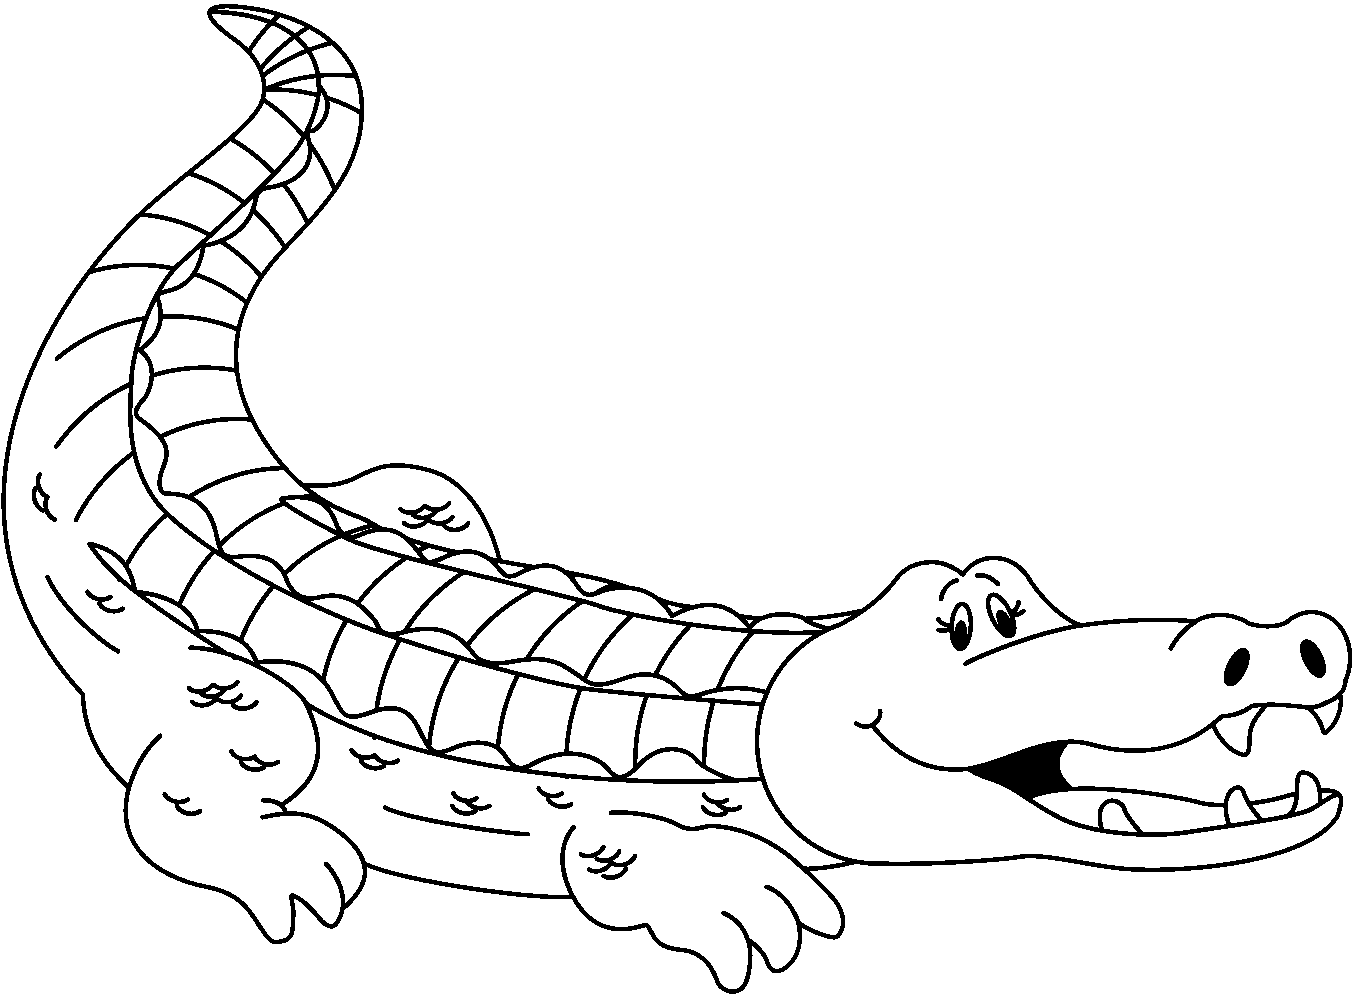 Alligator black and white clipart